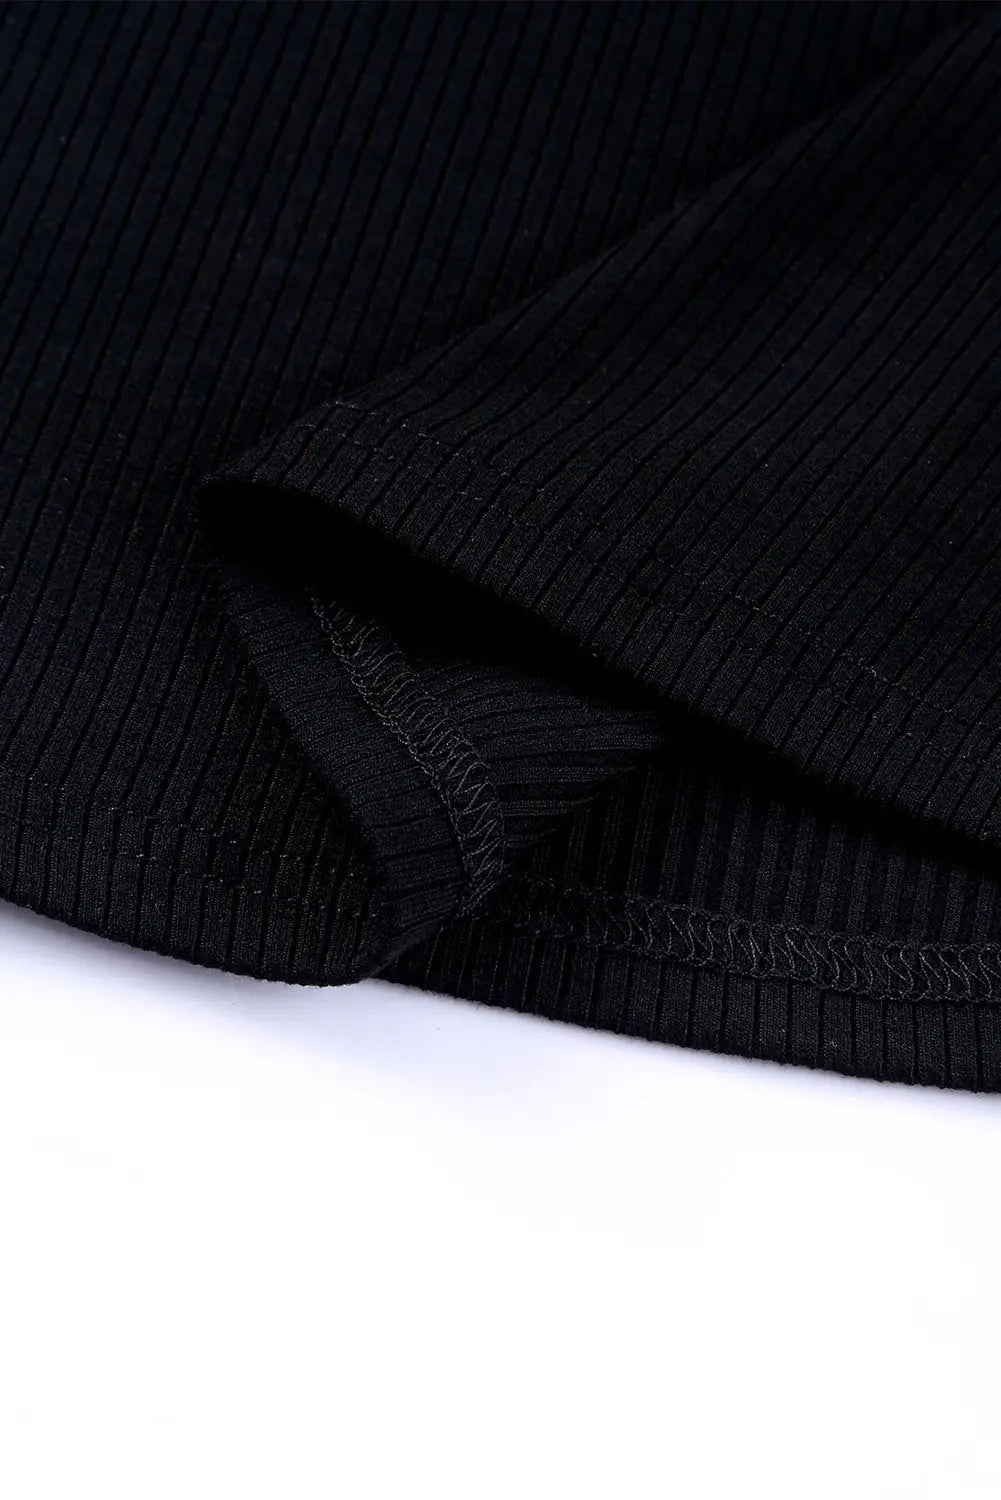 Dotty mesh ruffle sleeve ribbed knit top - tops/tops & tees